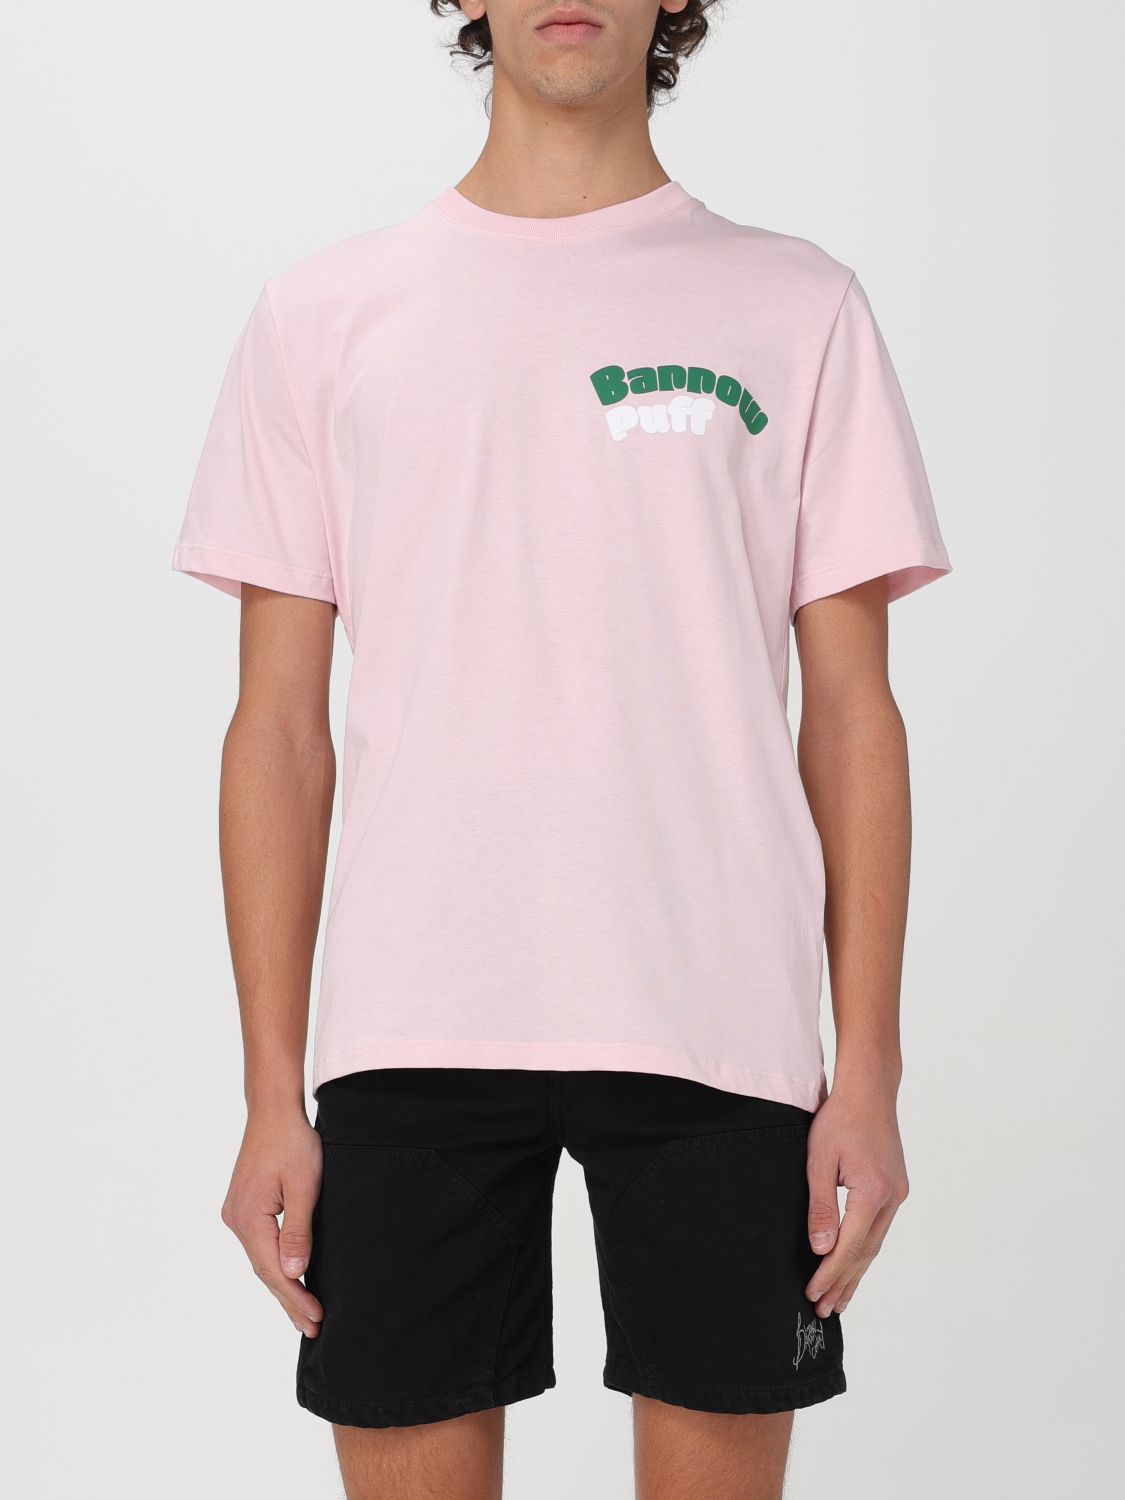 T恤 BARROW 男士 颜色 粉色